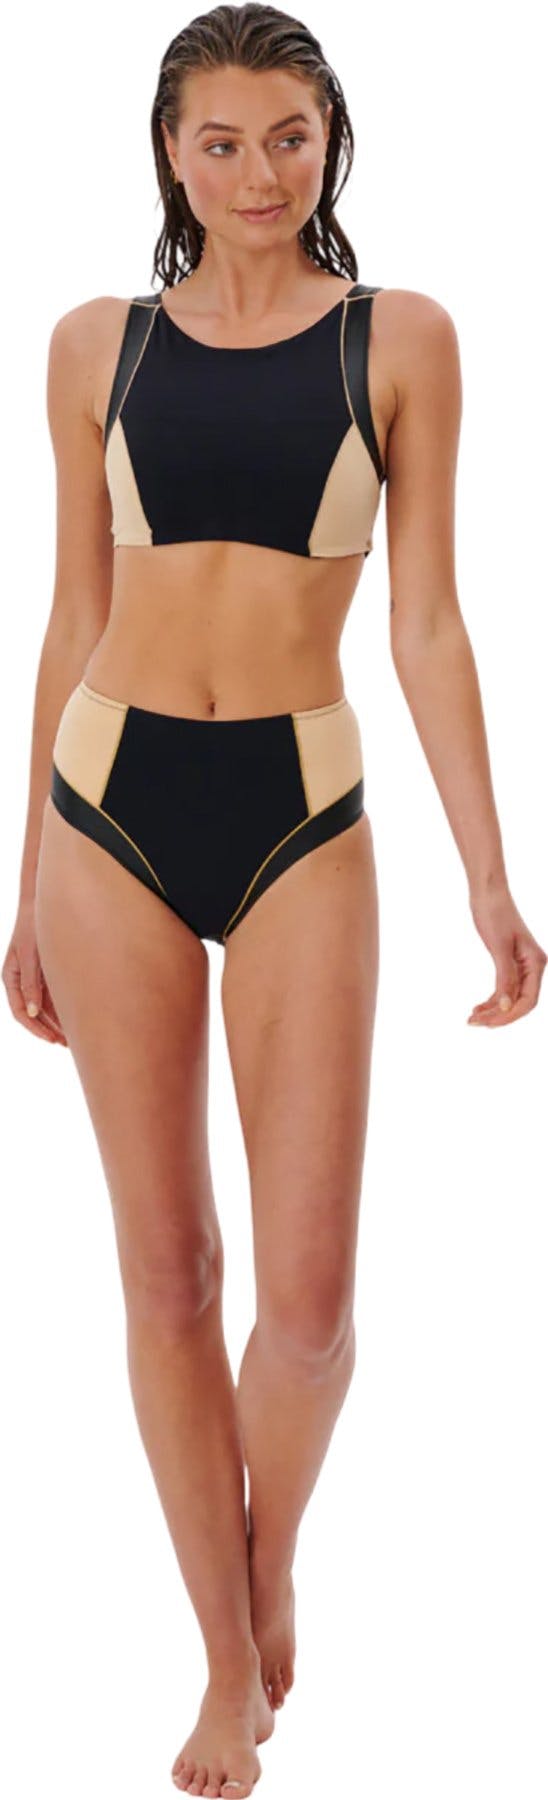 Product image for Mirage Ultimate Hi Waist Cheeky Bikini Bottom - Women's